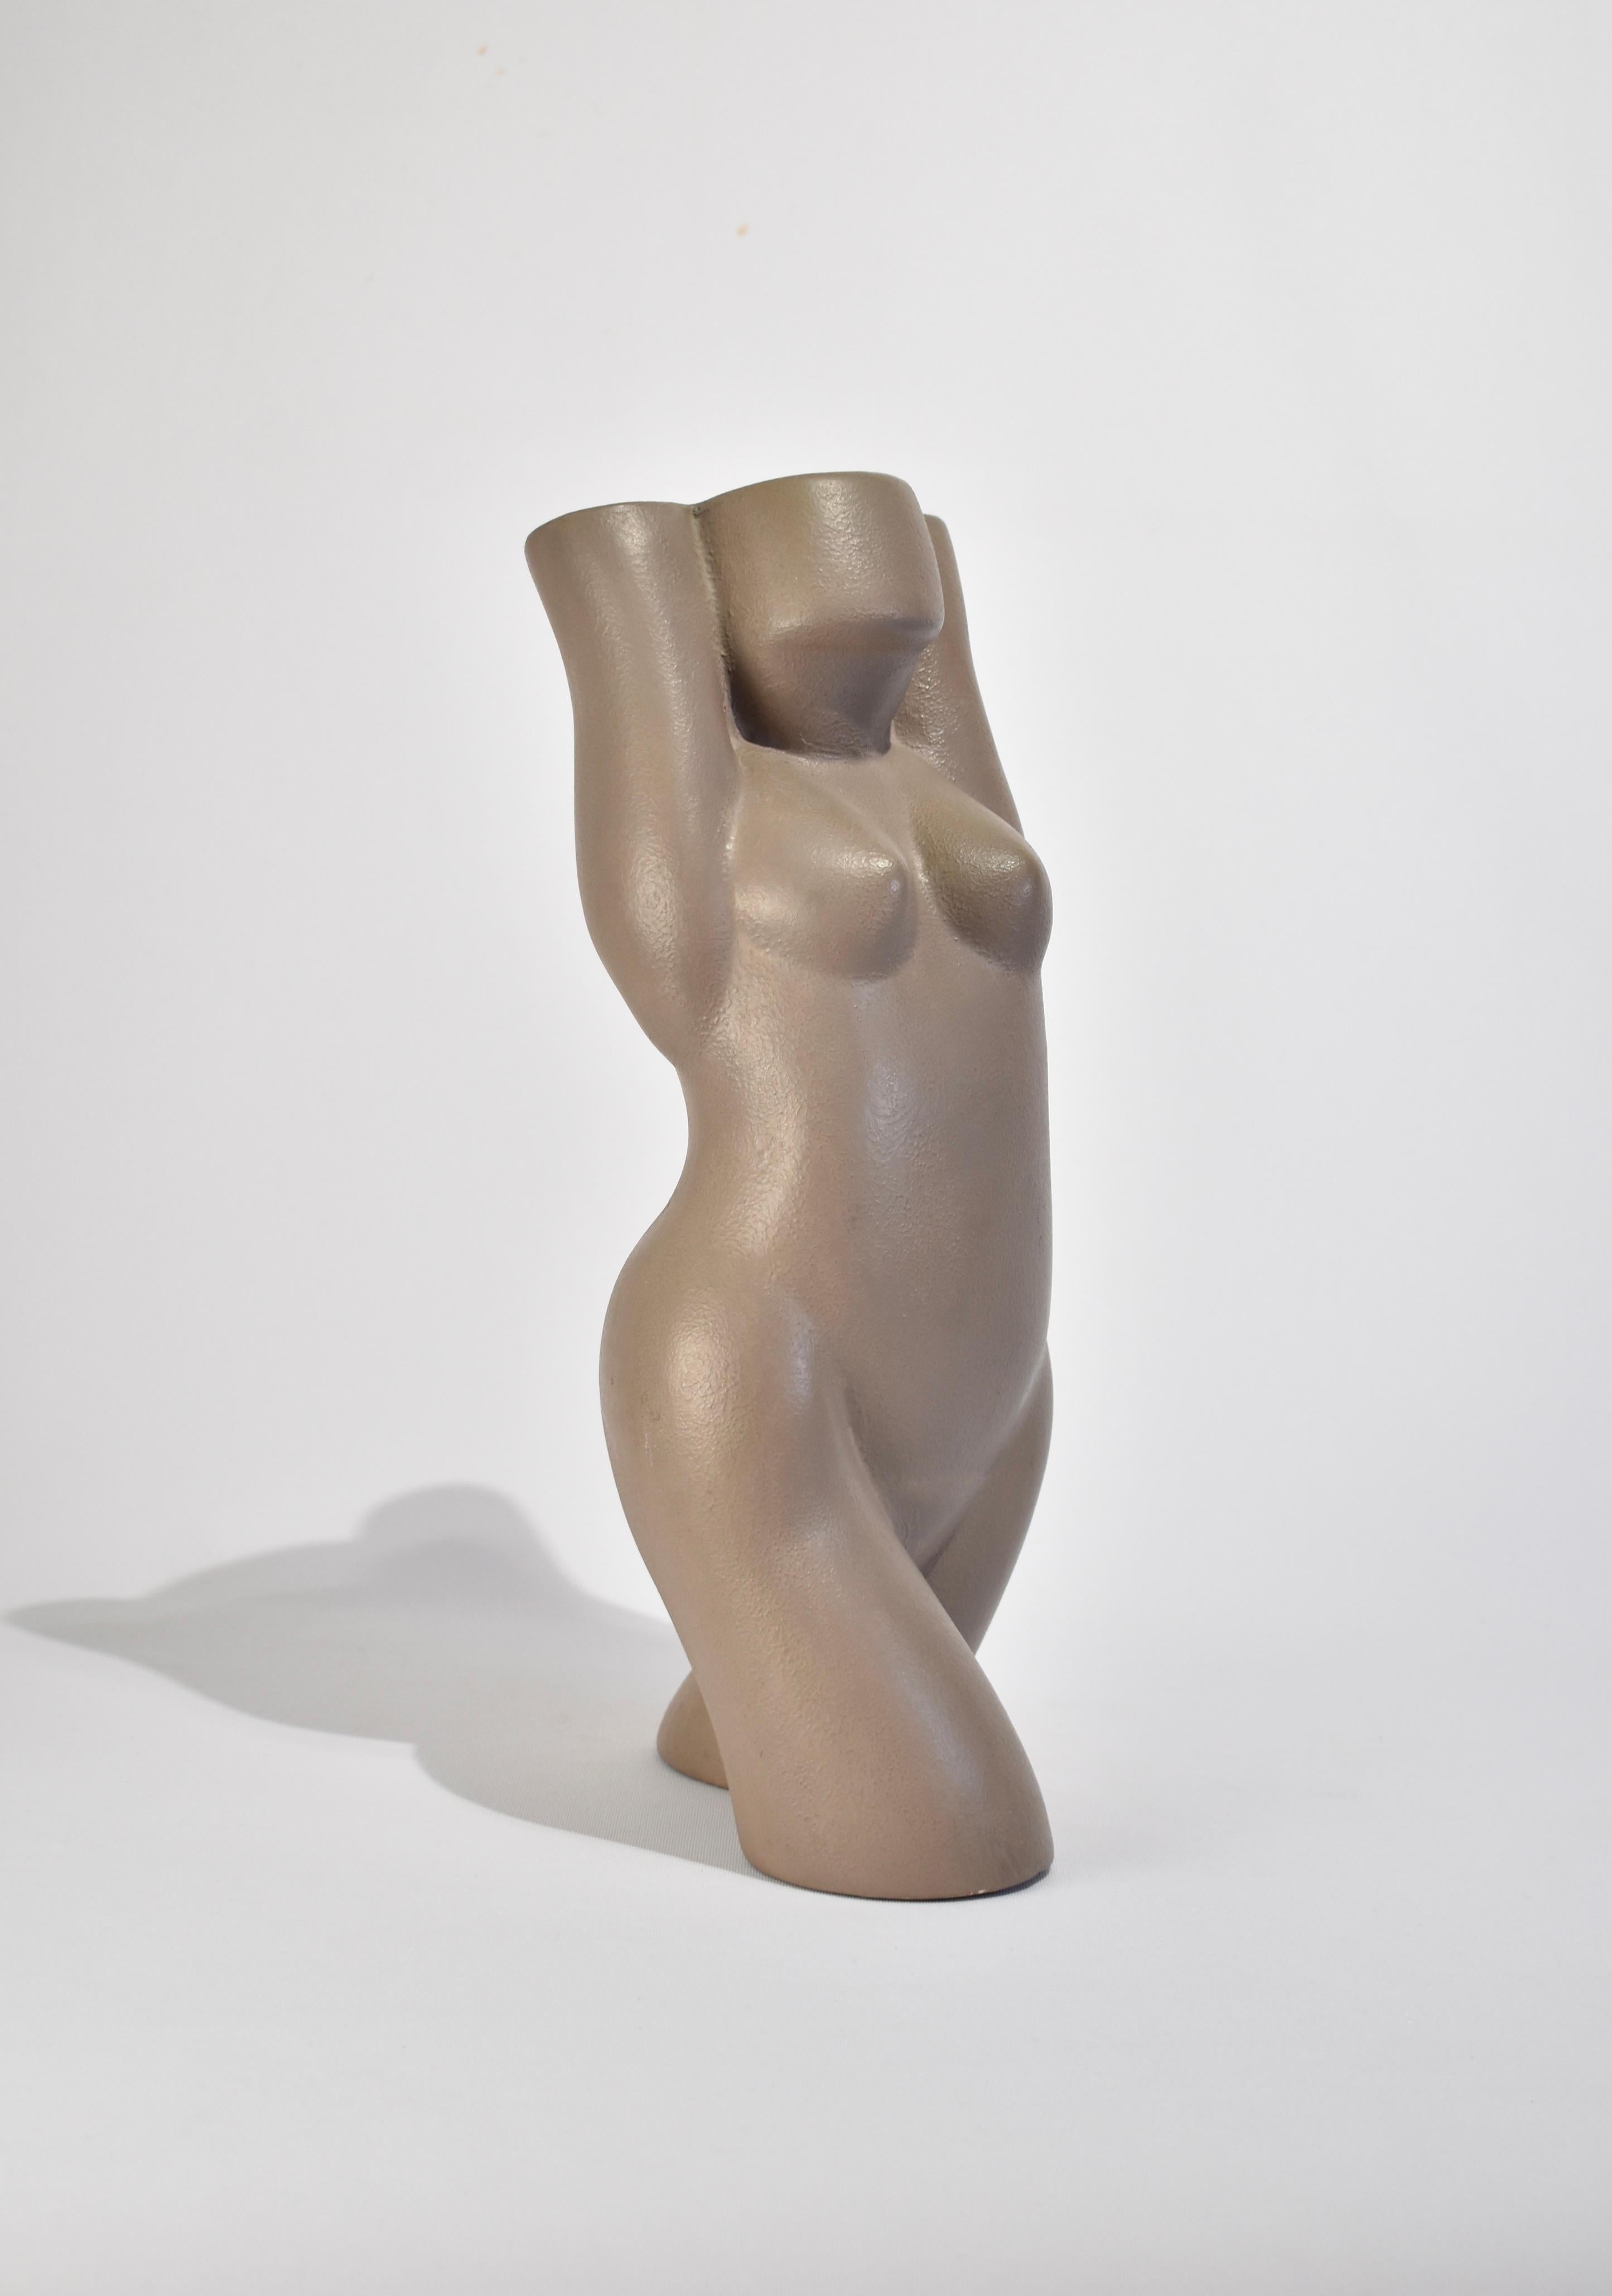 Hand-Crafted Ceramic Figure Sculpture